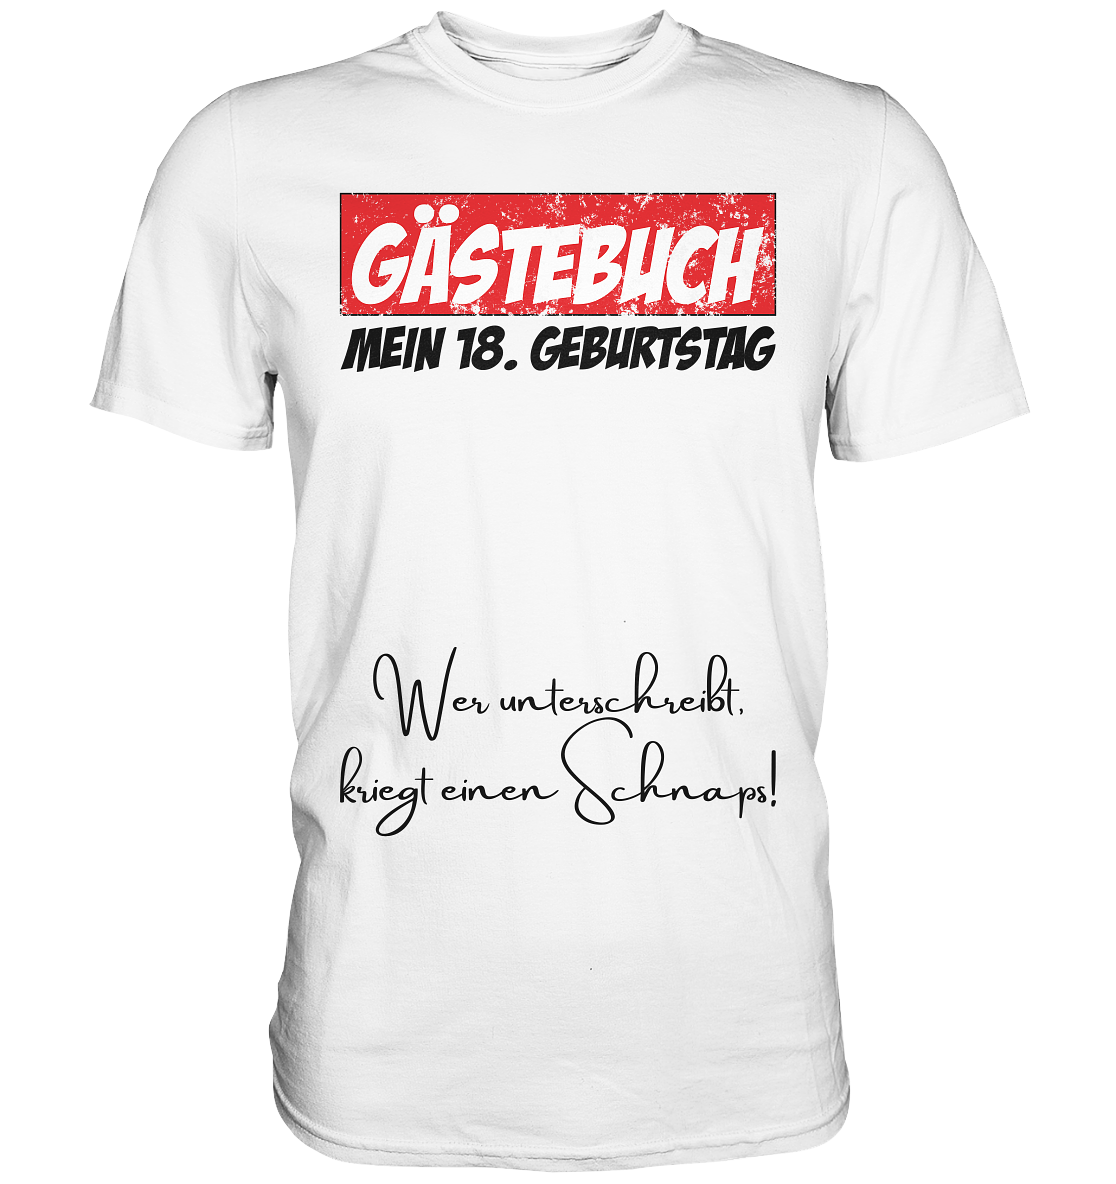 Must-Have 18. Geburtstags-Shirt: Gästebuch Style!